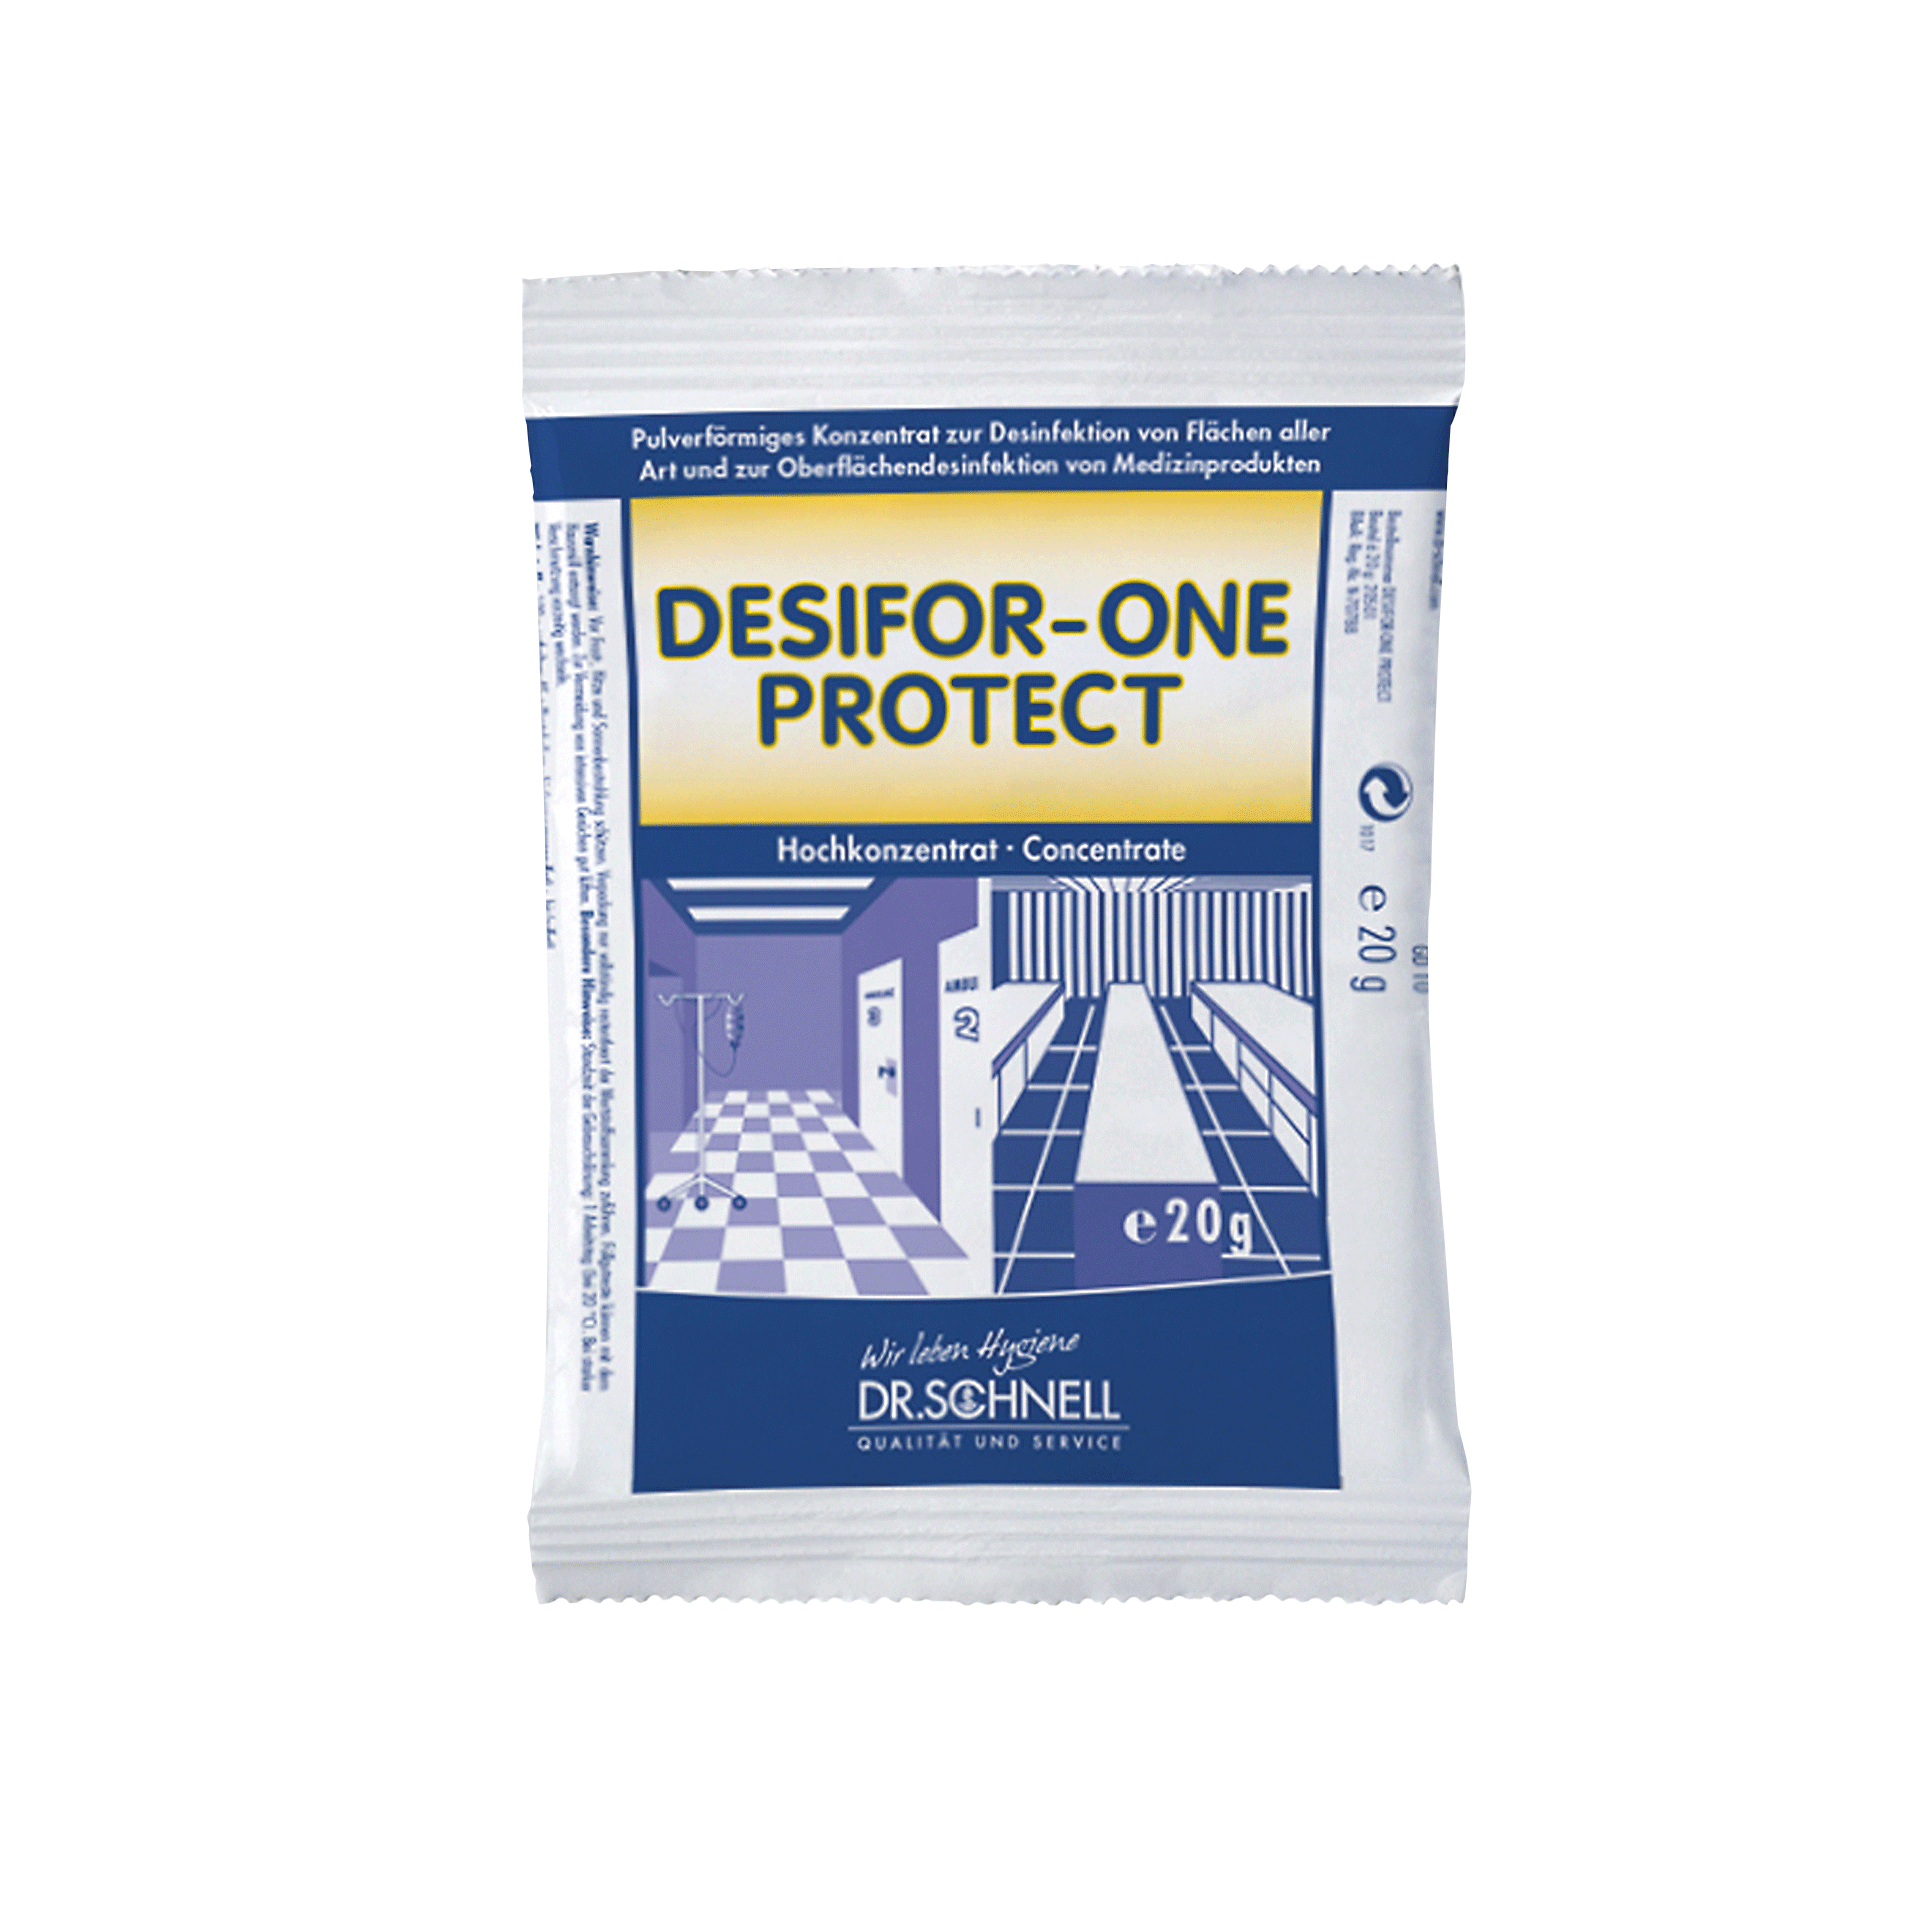 Dr. Schnell DESIFOR-ONE Protect Desinfektionskonzentrat, 20 g